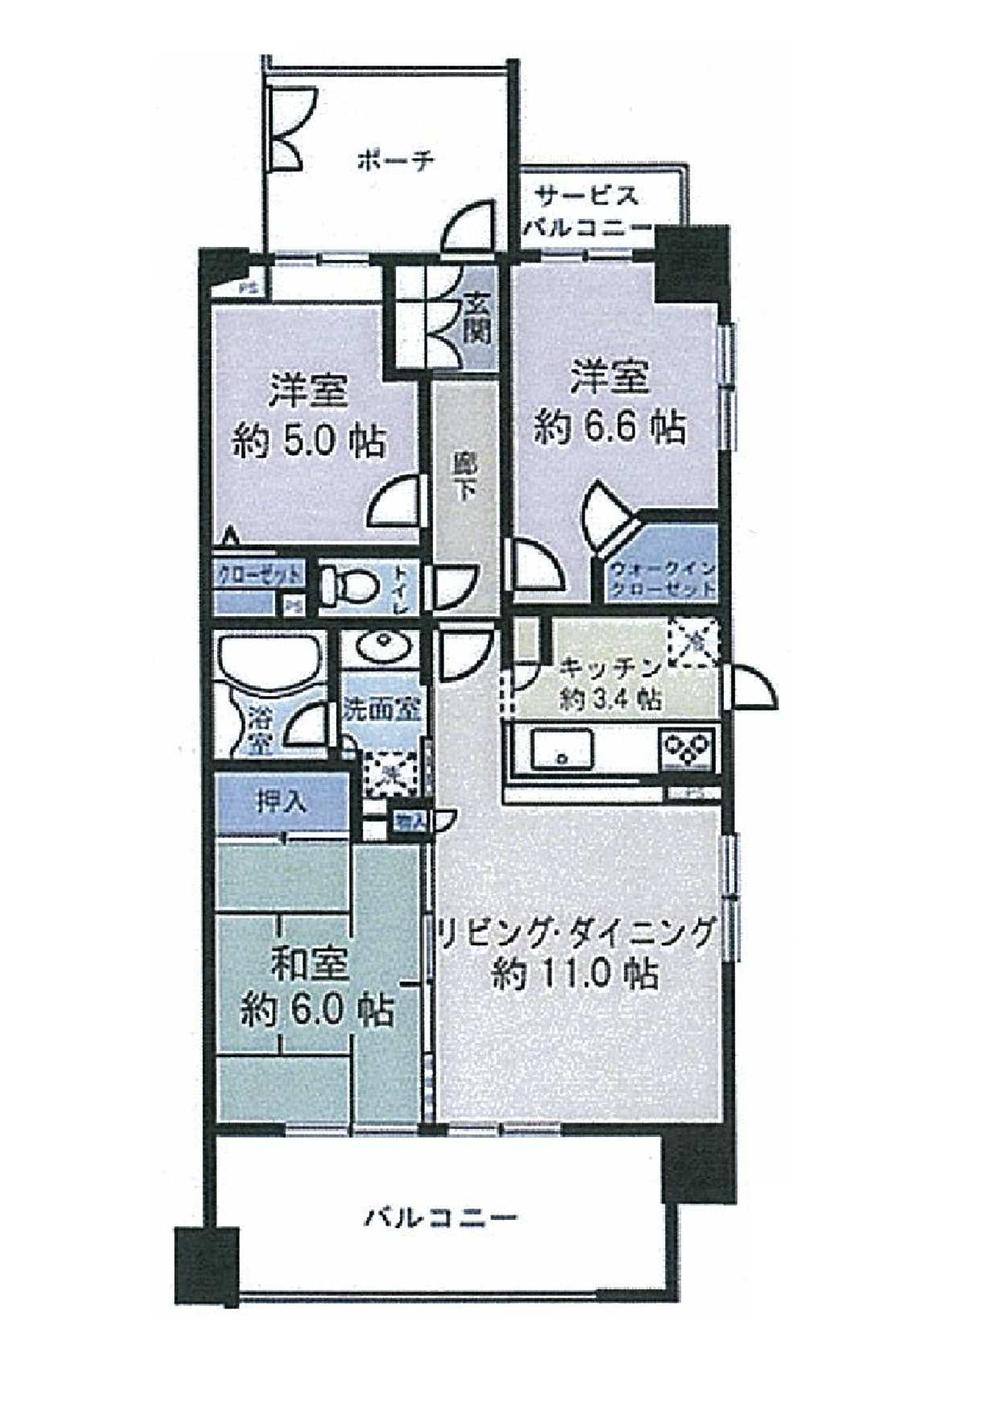 Floor plan. 3LDK, Price 23.8 million yen, Occupied area 66.02 sq m , Boast a balcony area 10.08 sq m easy-to-use storage rich floor plan